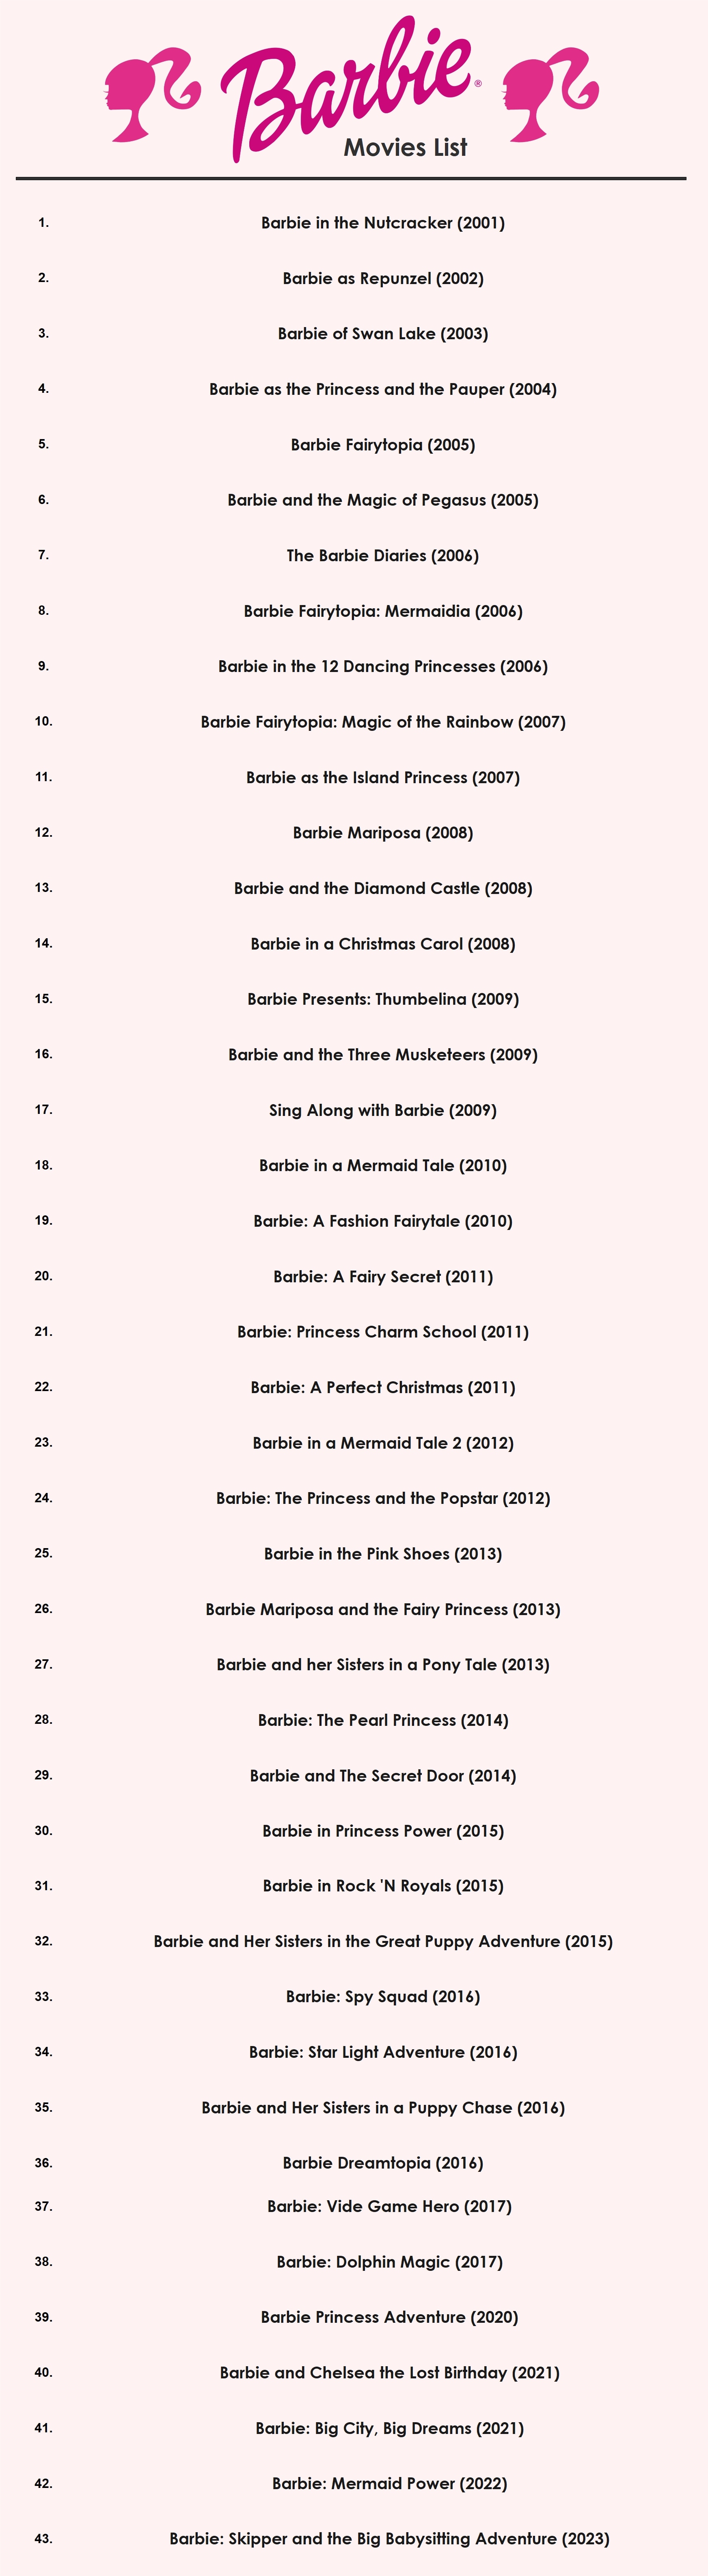 Lista de películas de Barbie